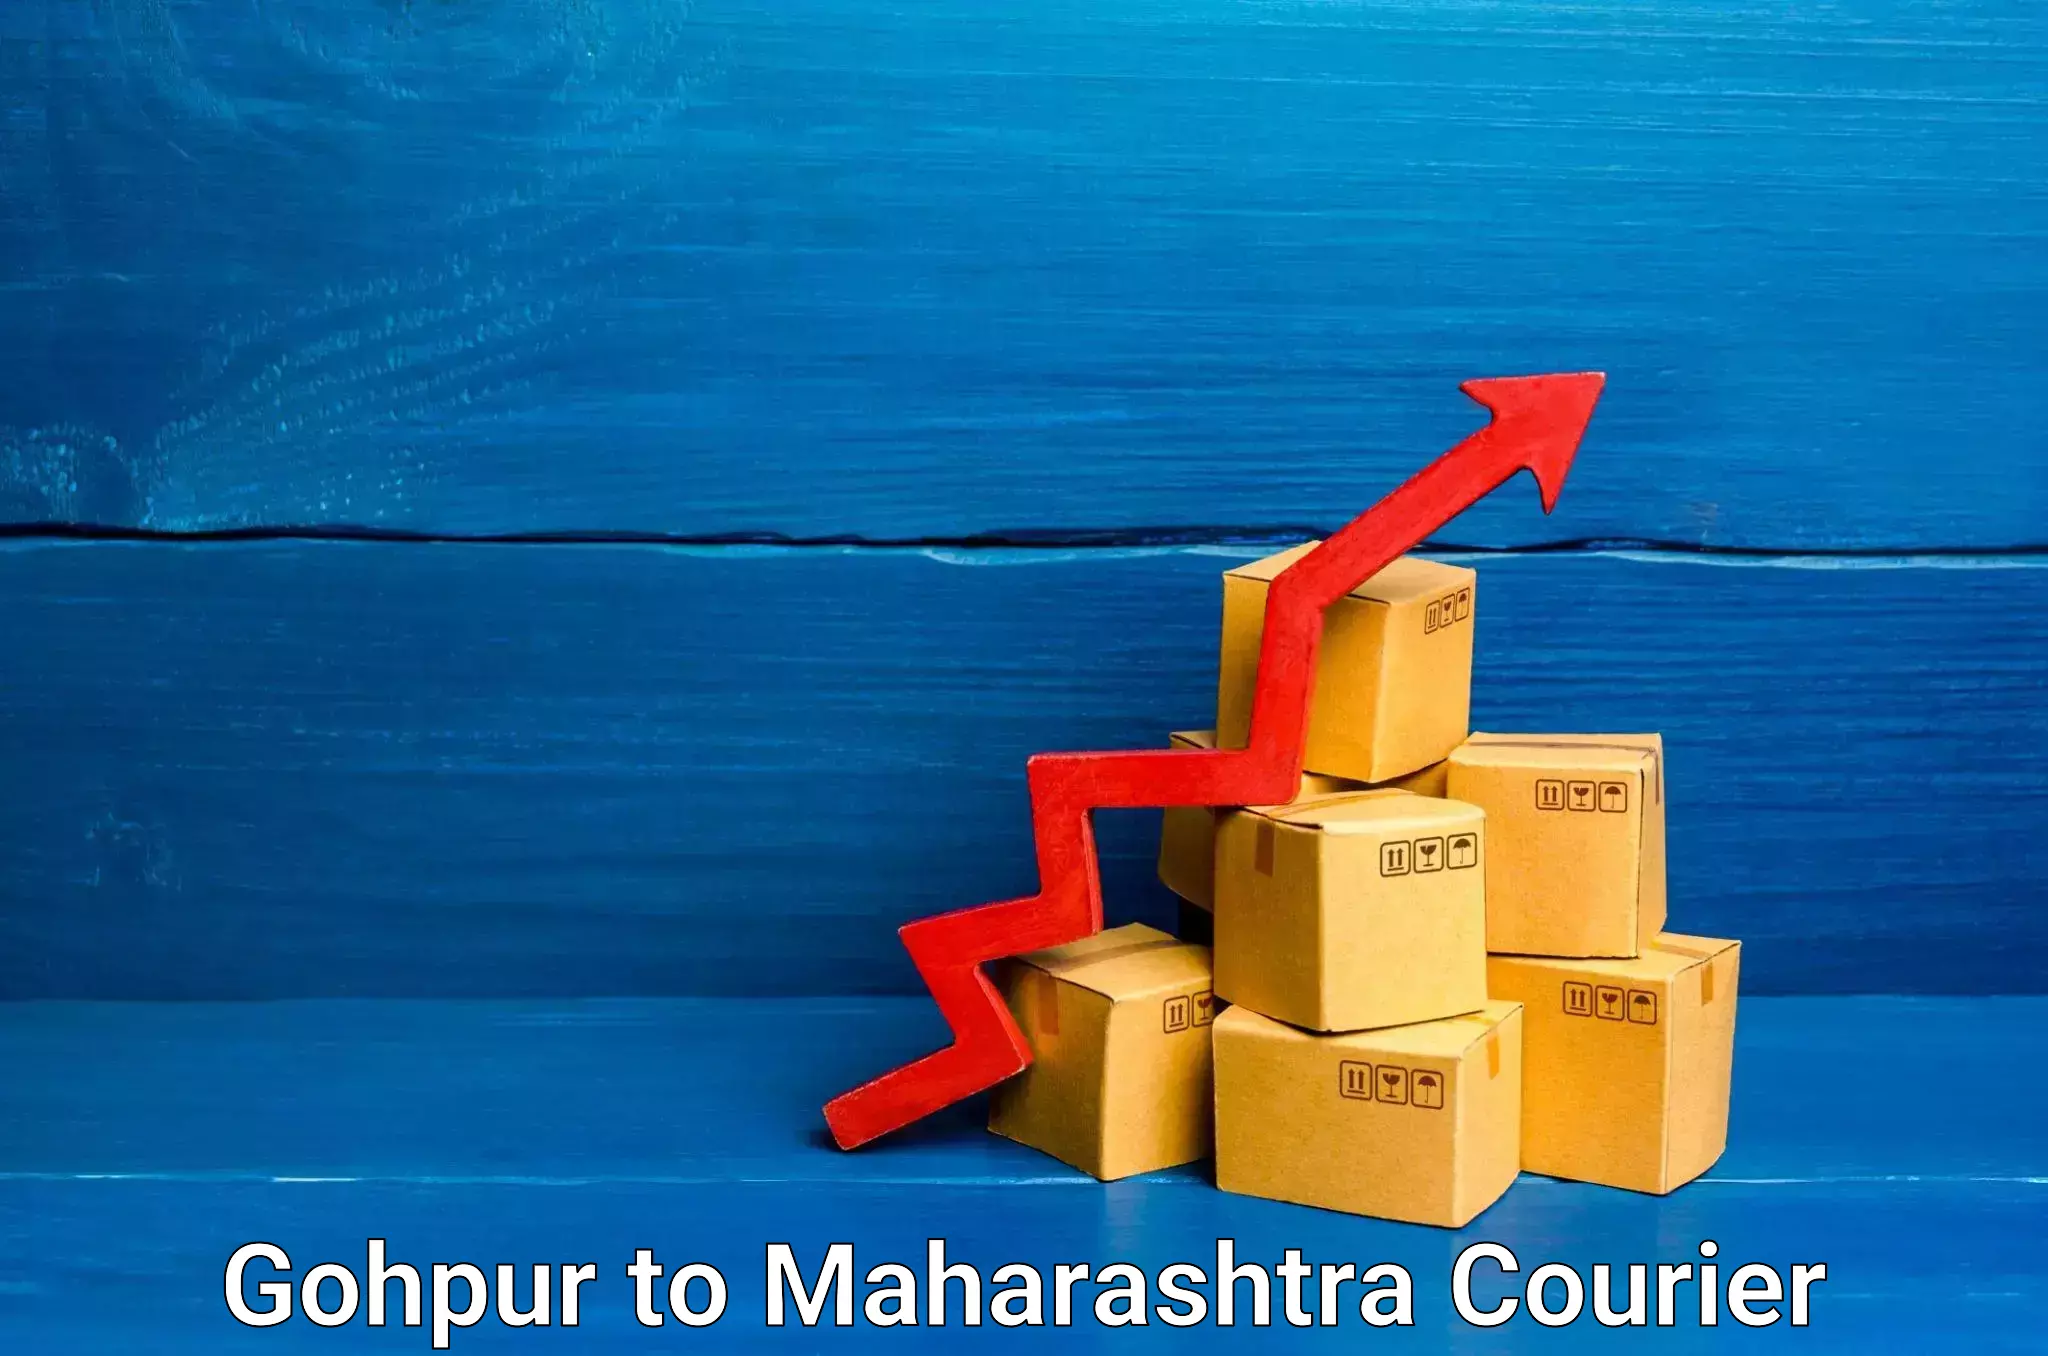 Nationwide shipping capabilities Gohpur to IIIT Nagpur